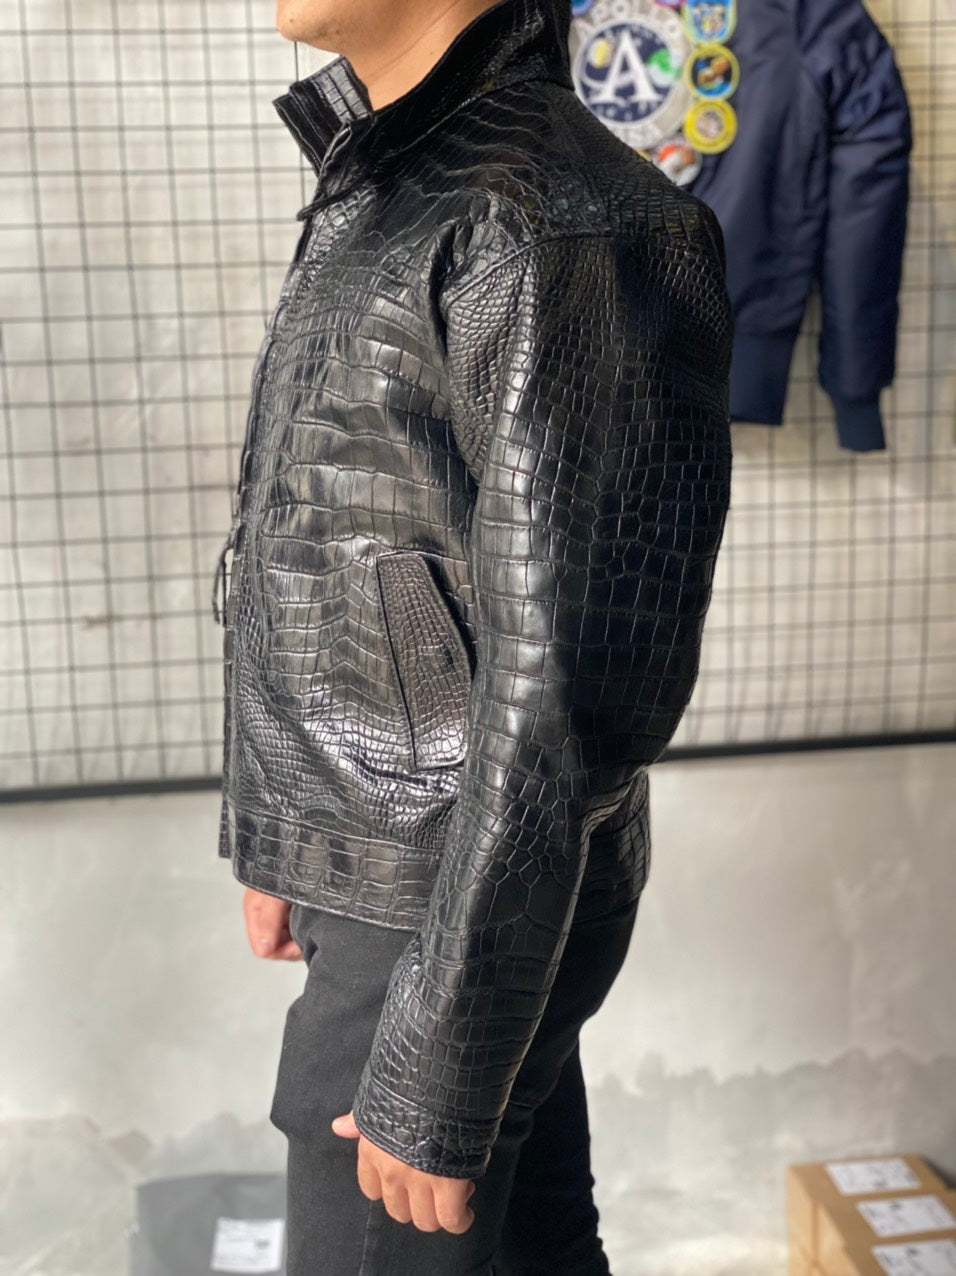 100% Real Crocodile / Alligator Leather Jacket Made To Measure